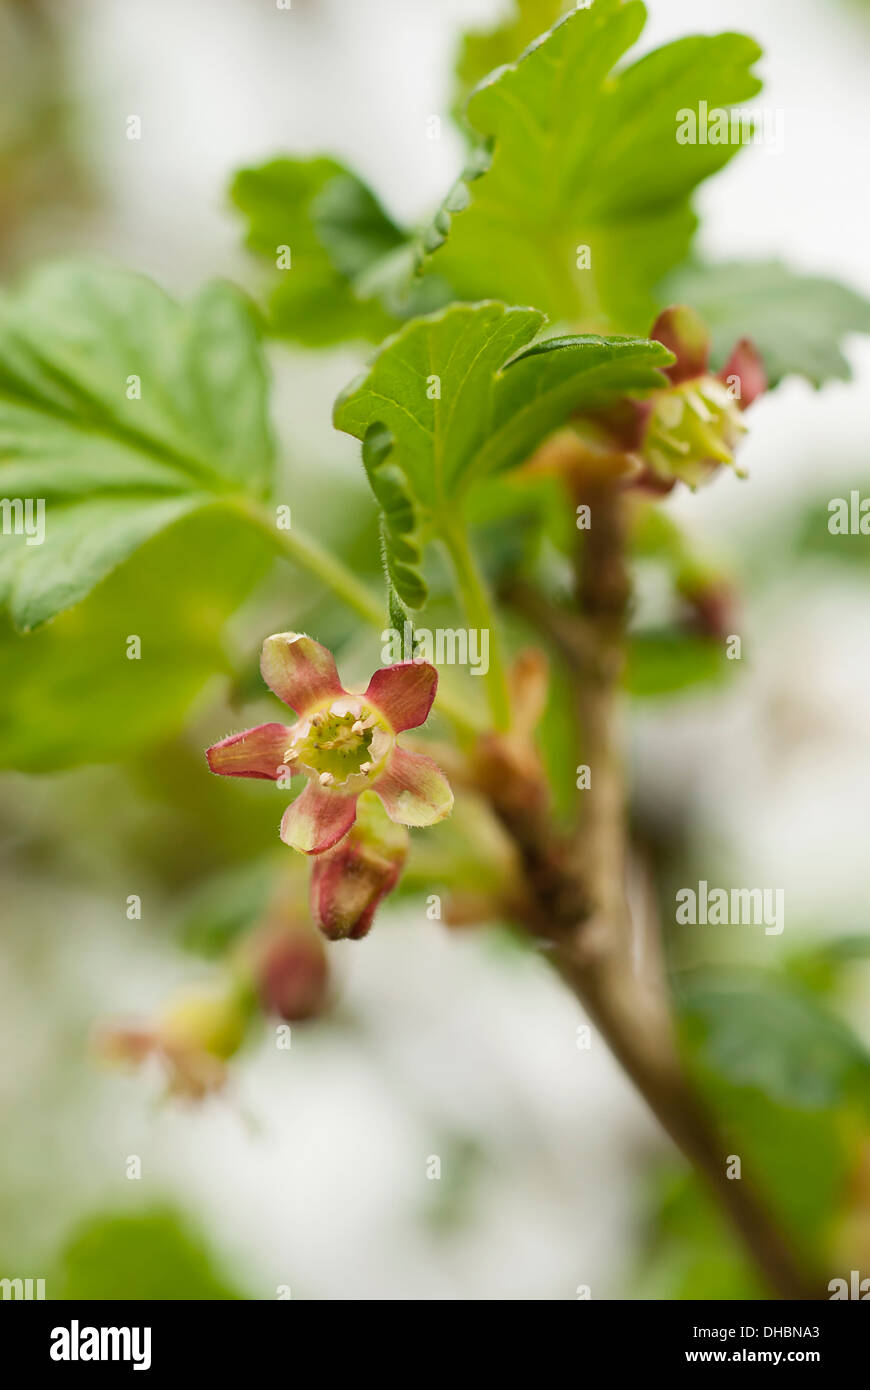 Gooseberry, Ribes uva-crispa 'Black velvet', growing outdoor on the plant. Stock Photo